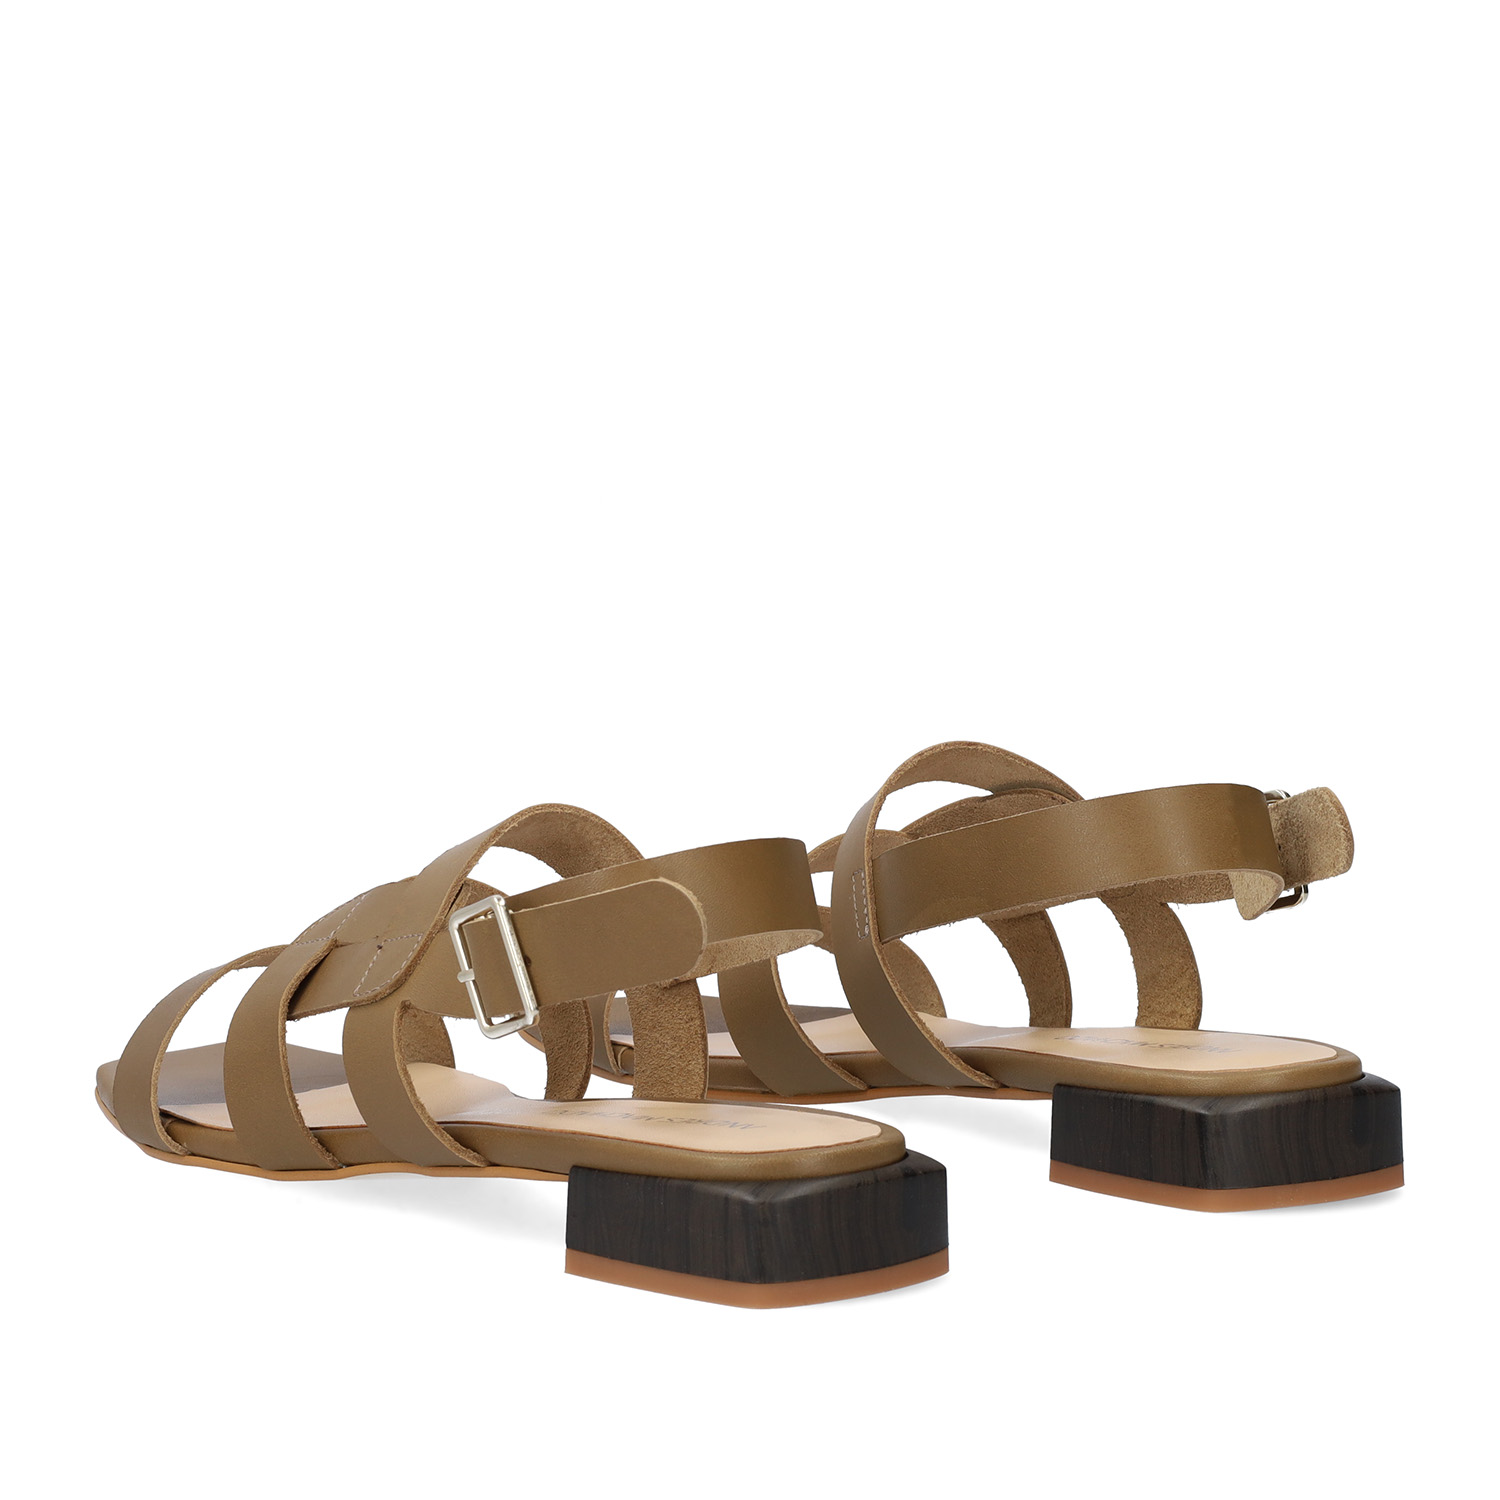 Kaki leather flat sandals 